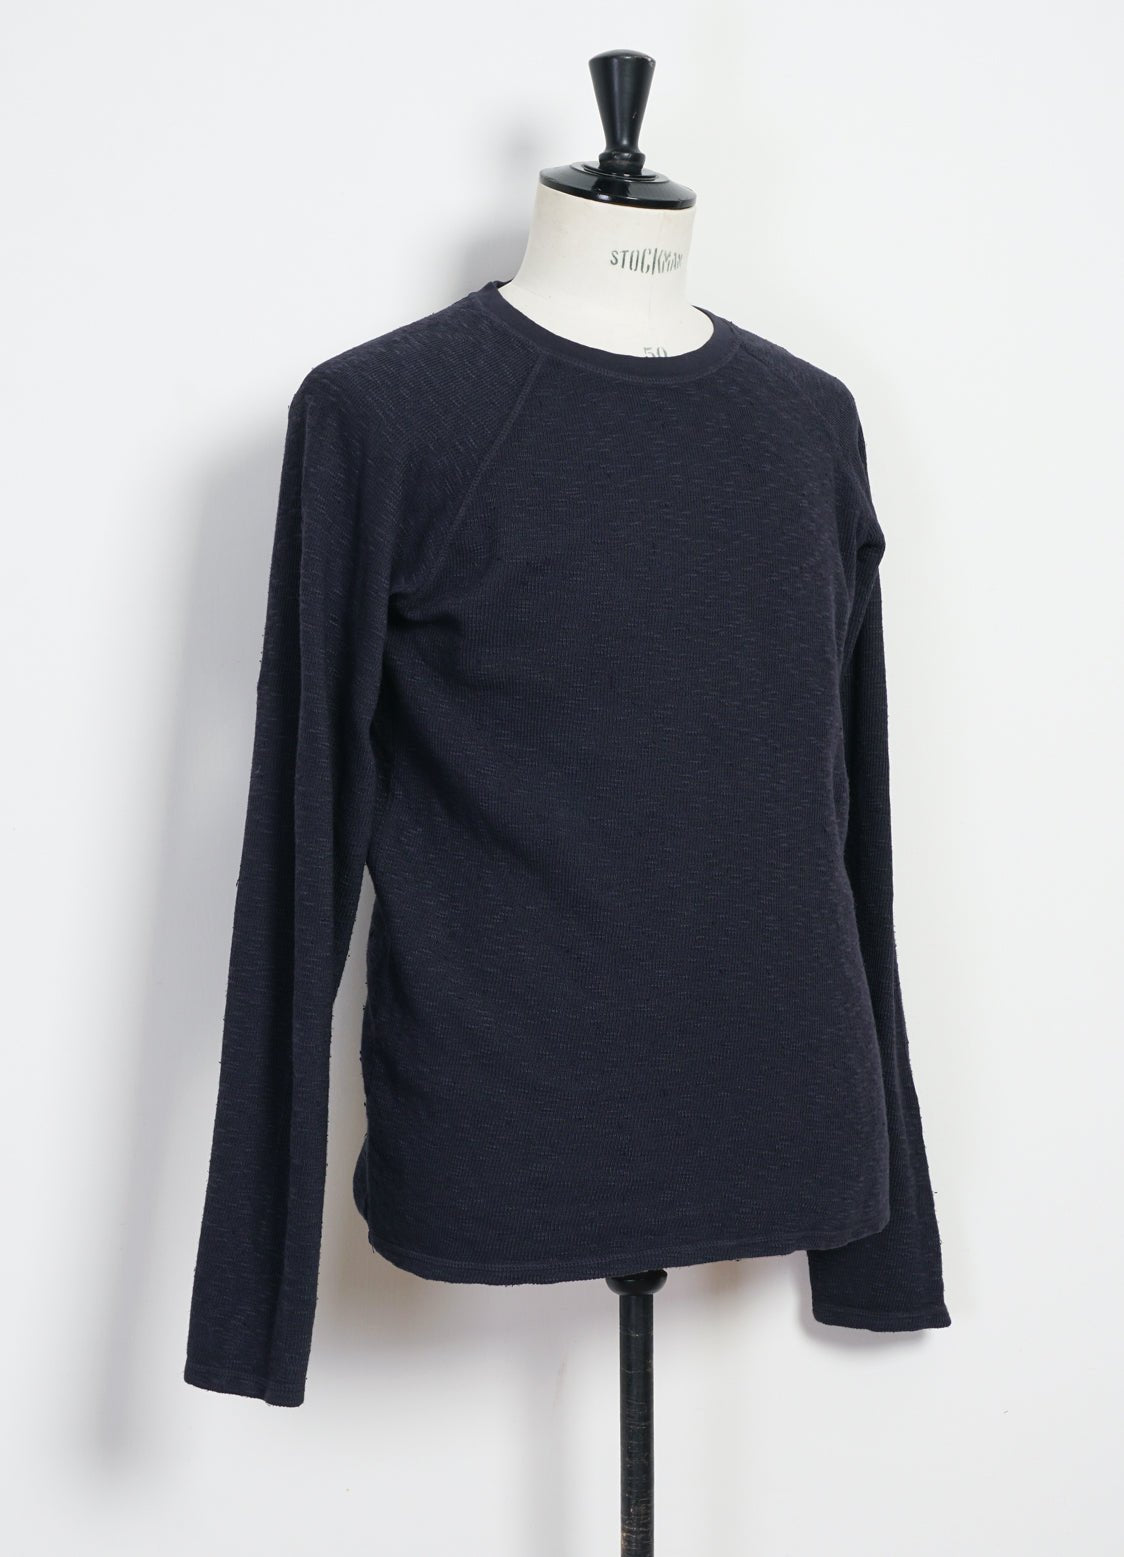 HANSEN GARMENTS - FELIX | Raglan Long Sleeve T-shirt | Indigo-like - HANSEN Garments